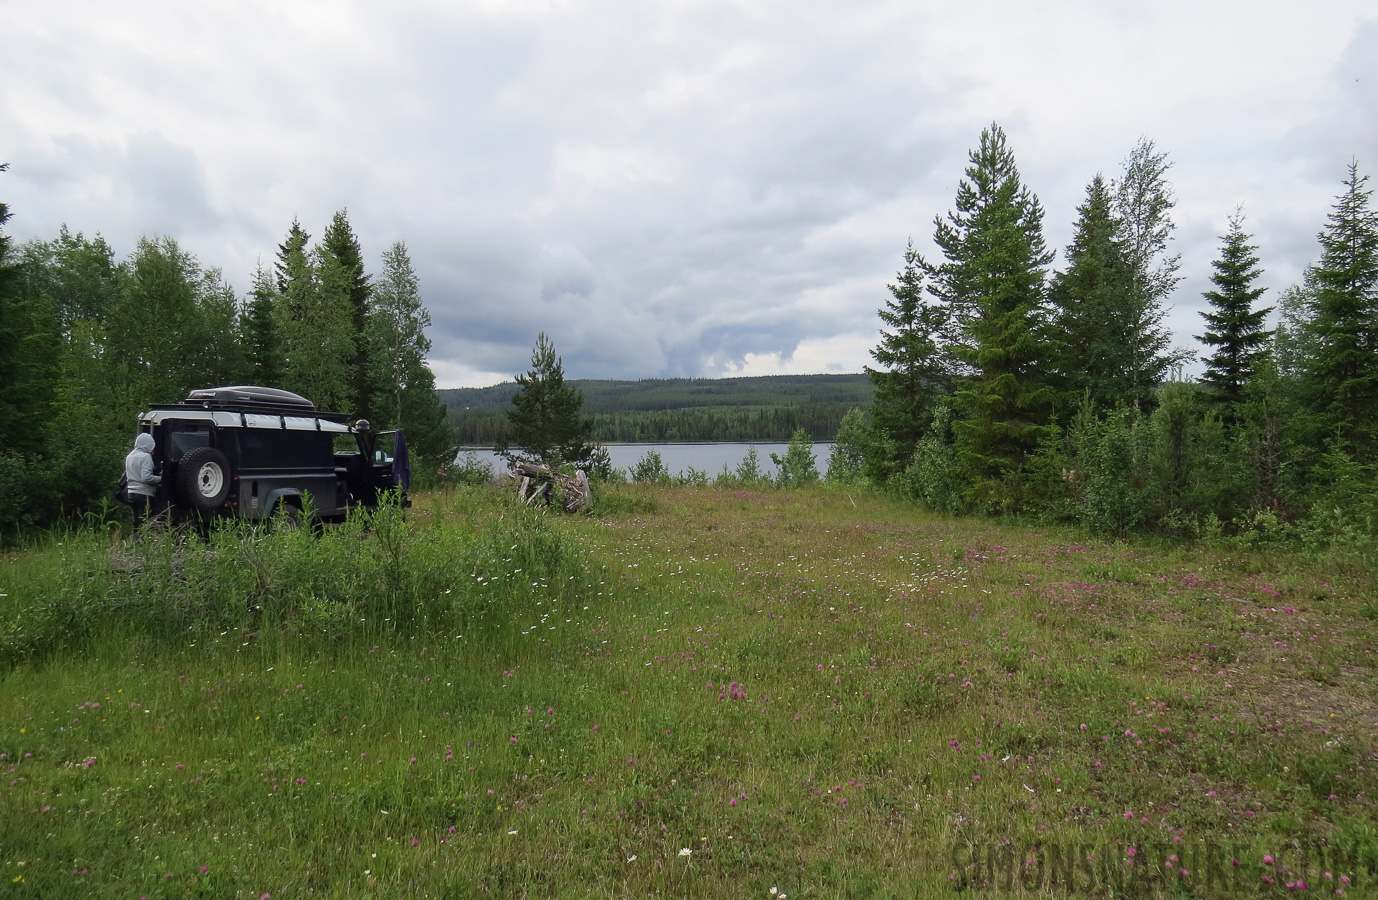 Schweden - Wilderness route [4.3 mm, 1/640 sec at f / 4.0, ISO 160]